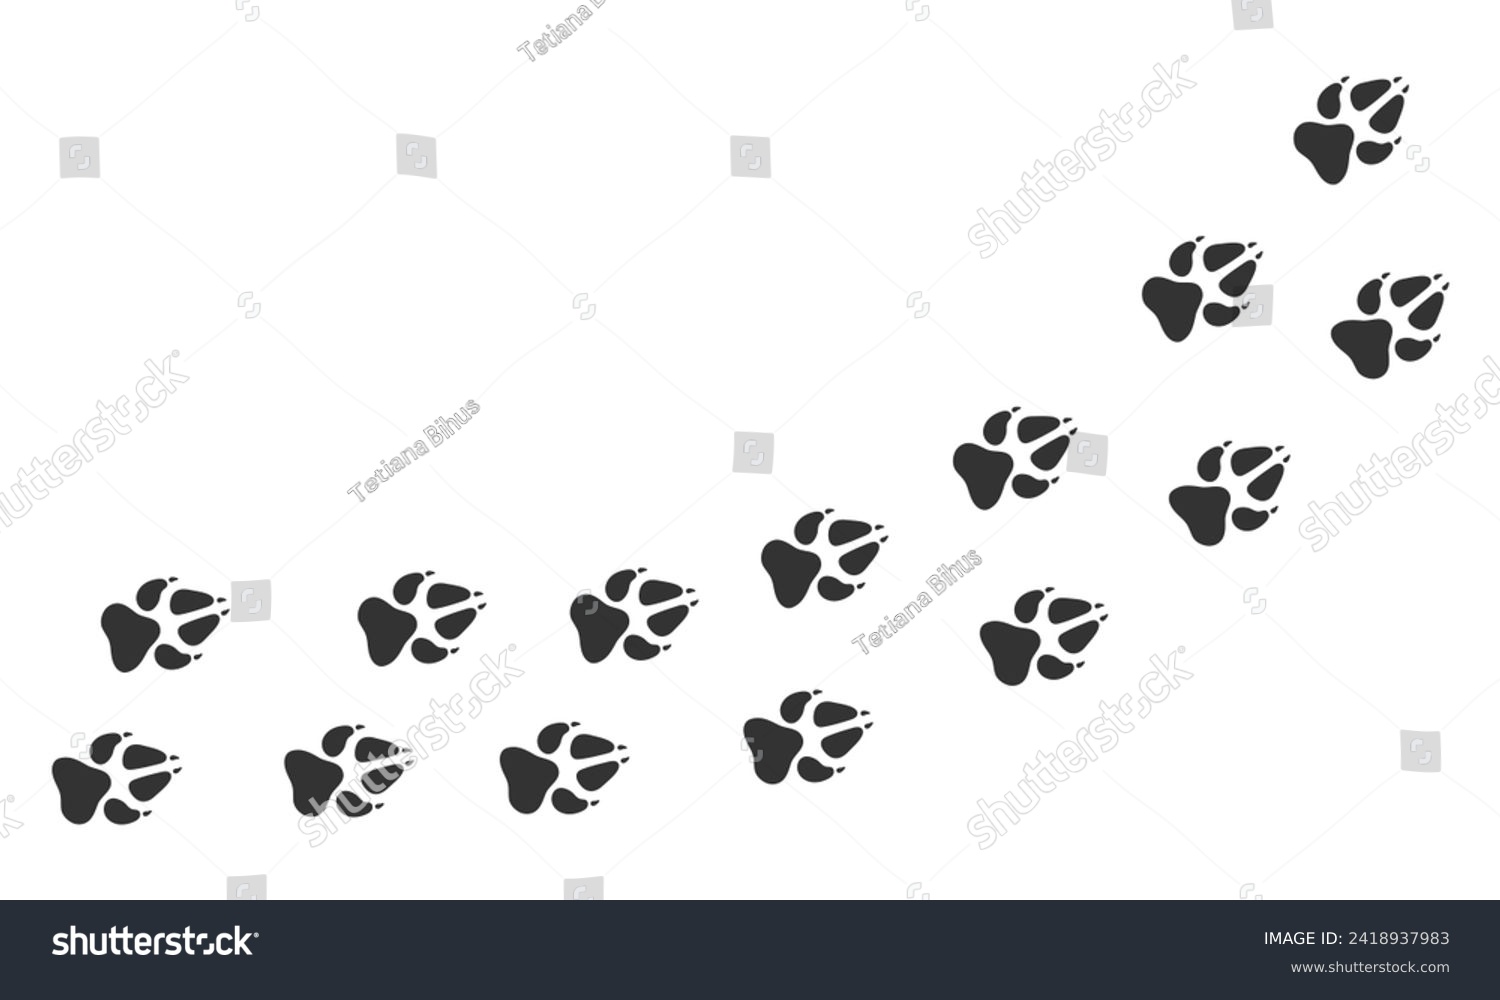 SVG of Paws of a wolf. Animal paw prints, diagonal animal tracks for prints. Vector illustration. svg